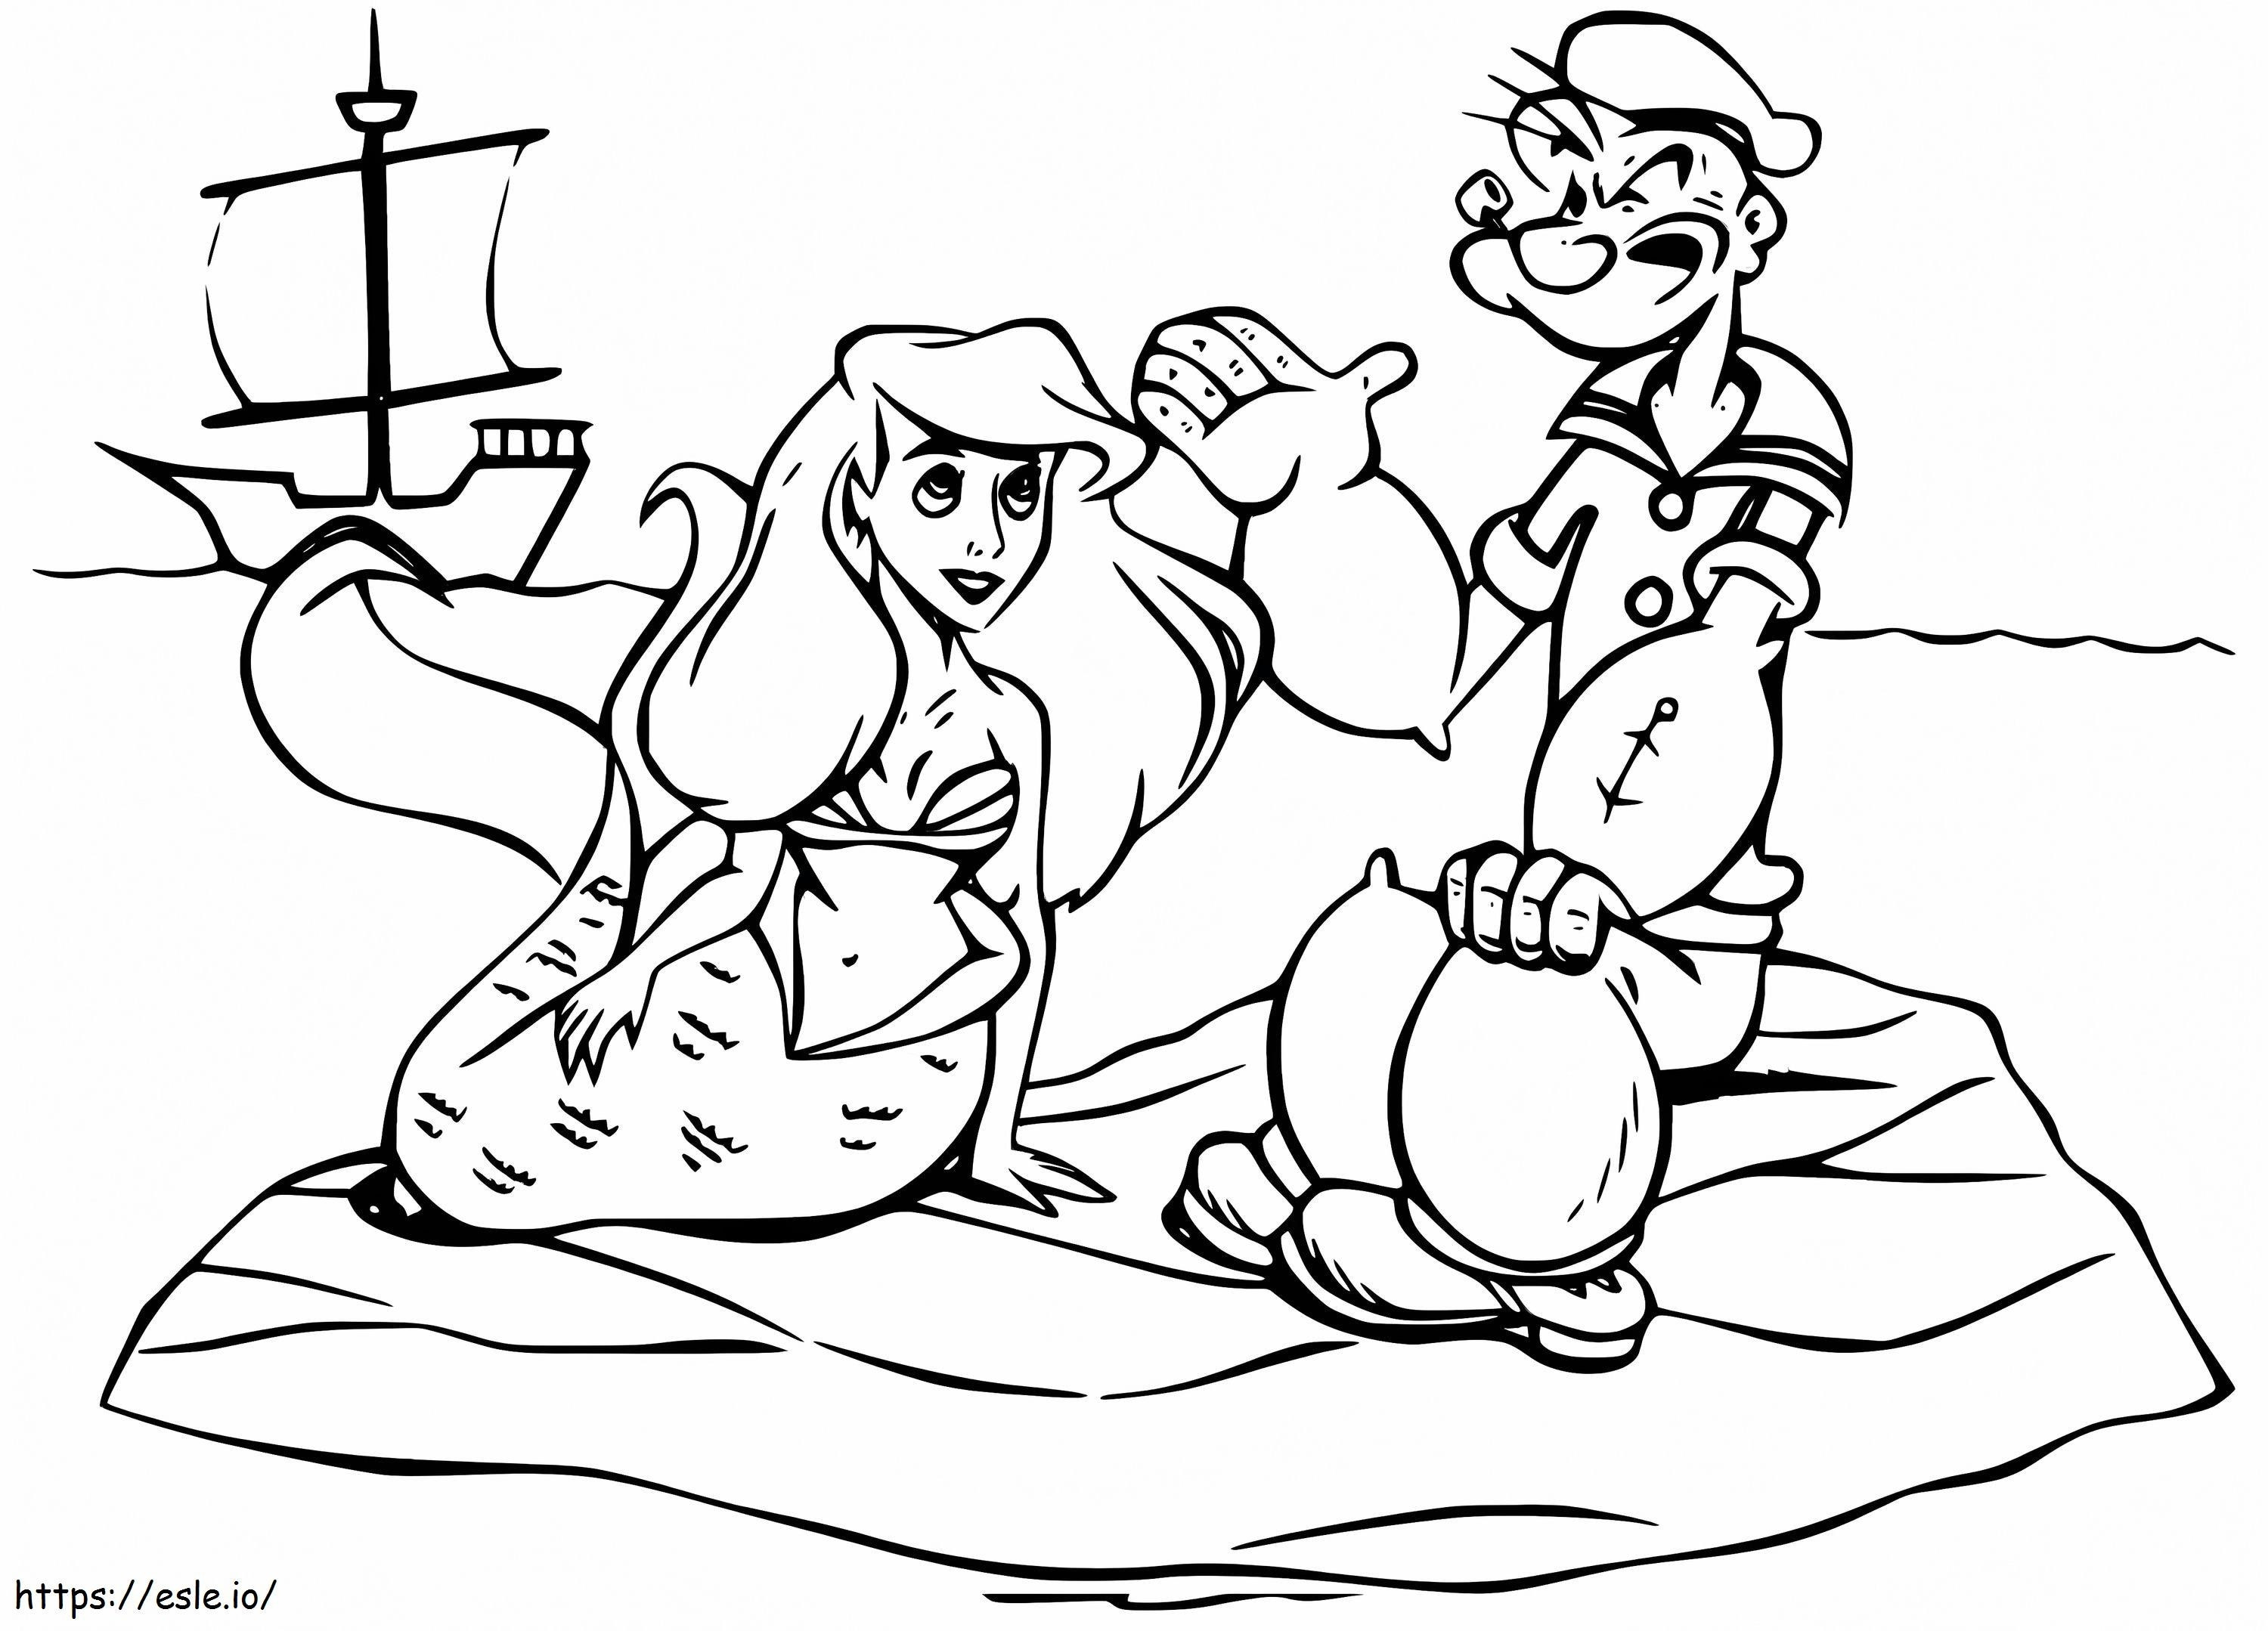 Popeye Y Ariel coloring page